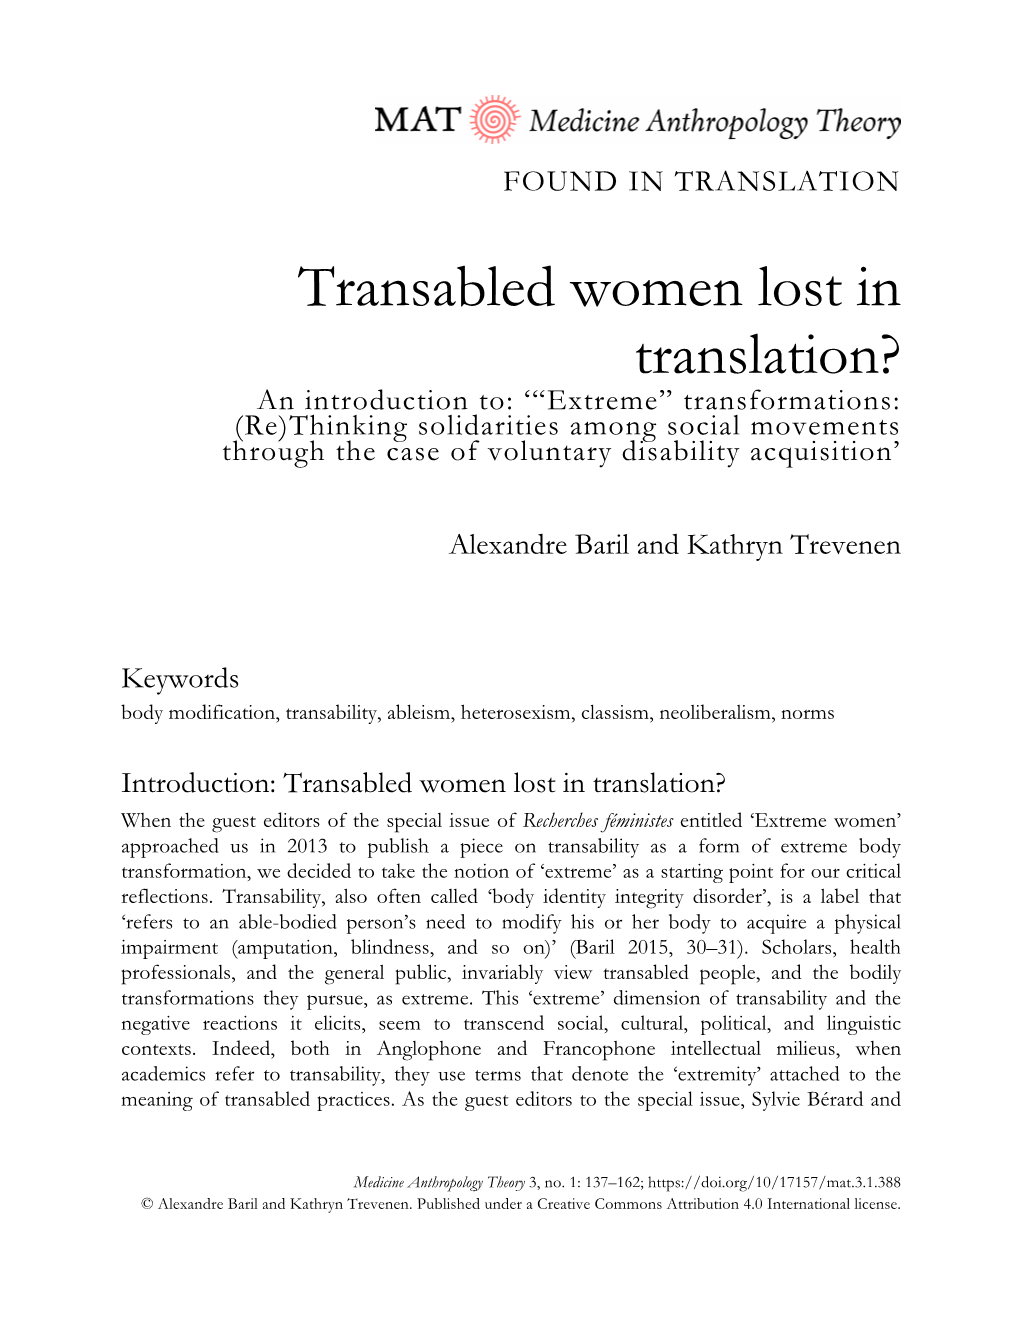 Transabled Women Lost in Translation?